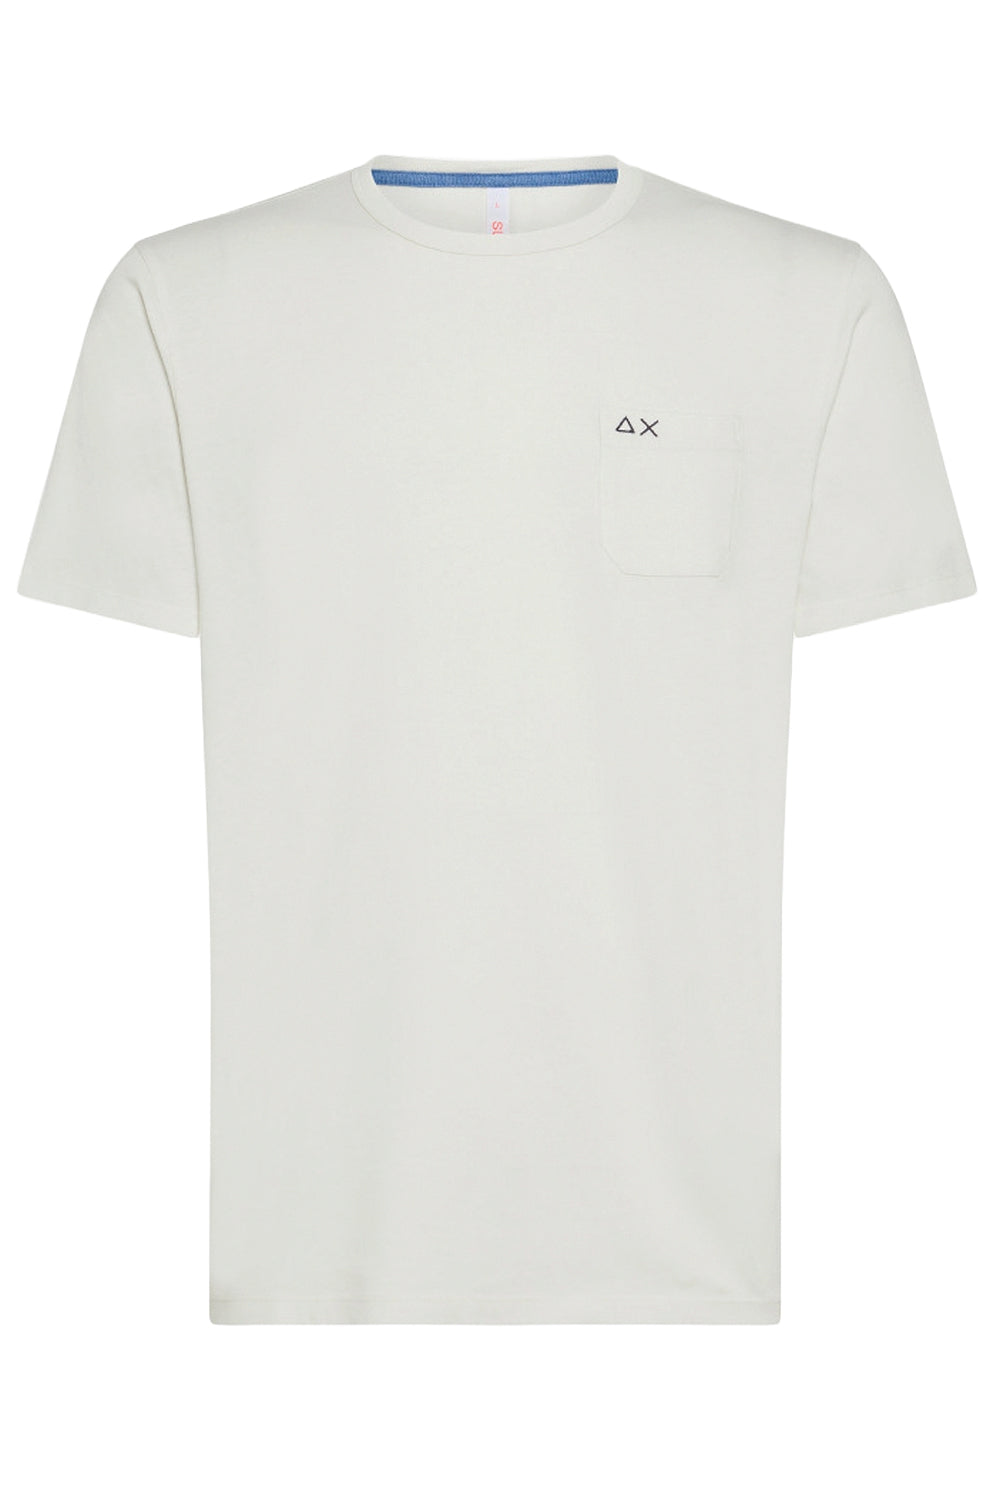 SUN 68 T-shirt girocollo con taschino